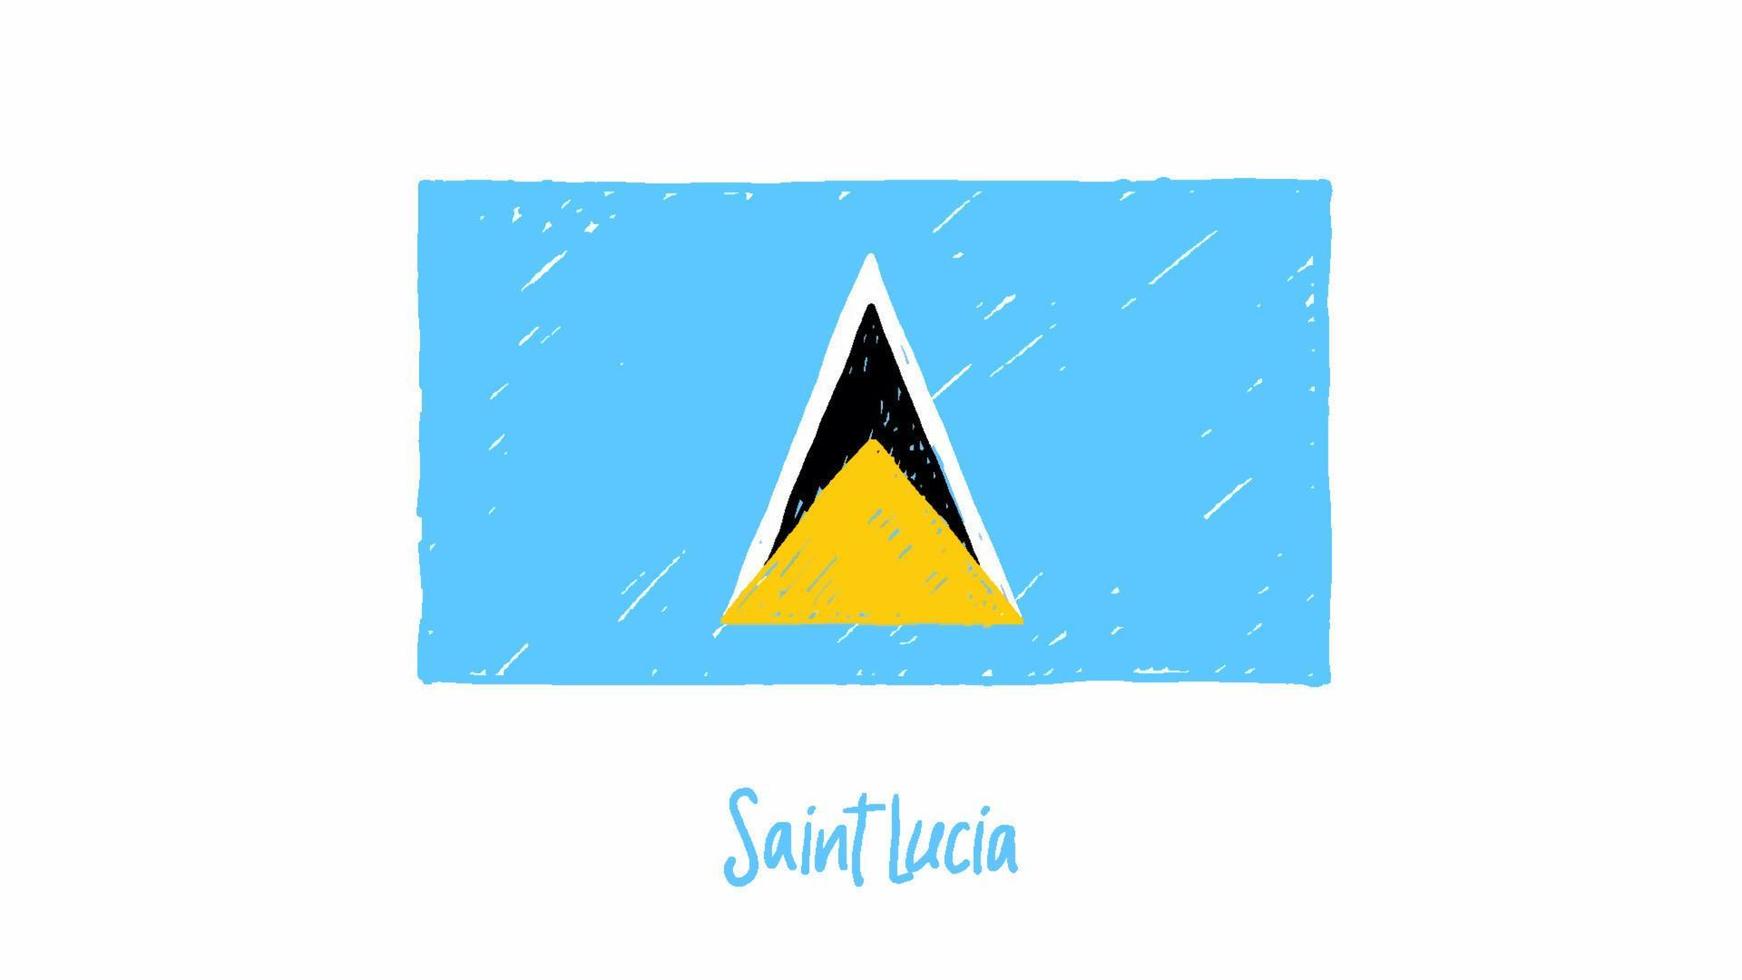 Saint Lucia Flag Marker or Pencil Sketch Illustration Vector